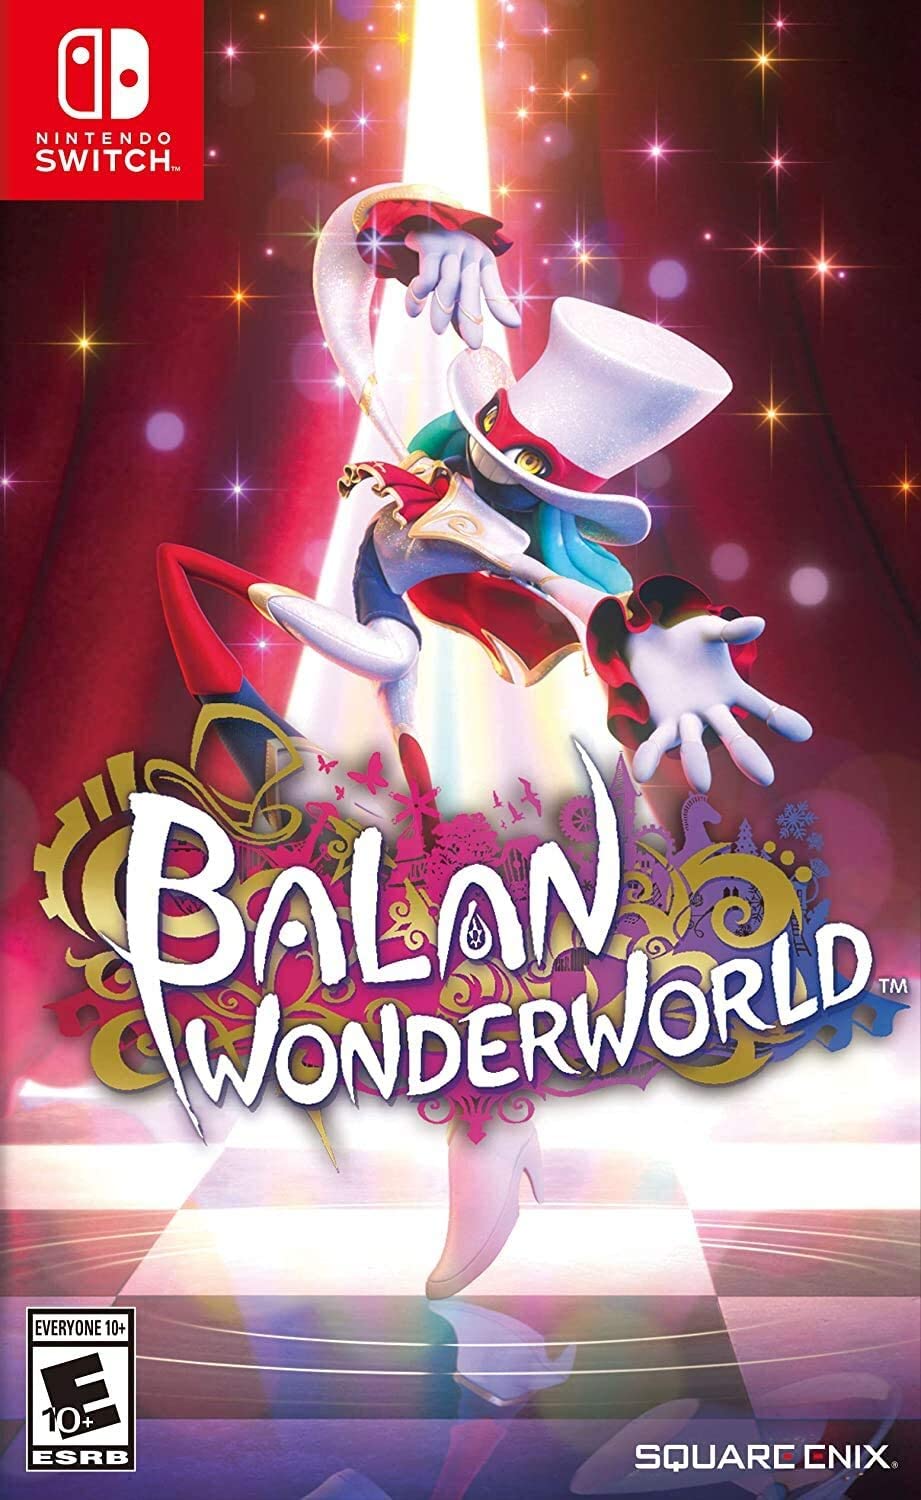 Balan Wonderworld (Switch)